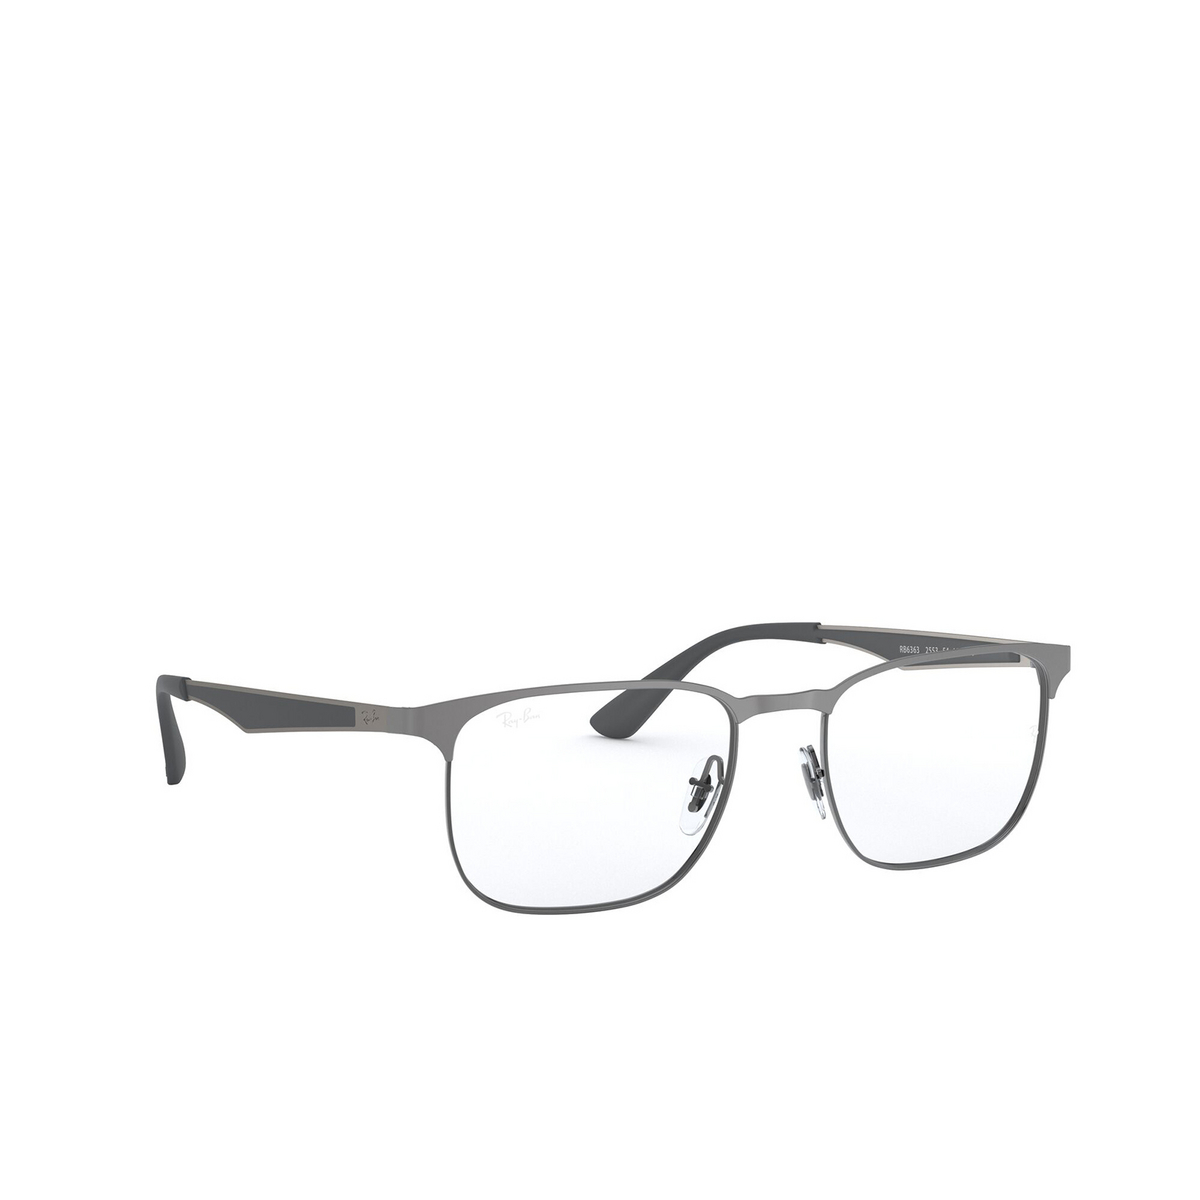 Ray-Ban® Square Eyeglasses: RX6363 color Brushed Gunmetal On Gunmetal 2553 - three-quarters view.